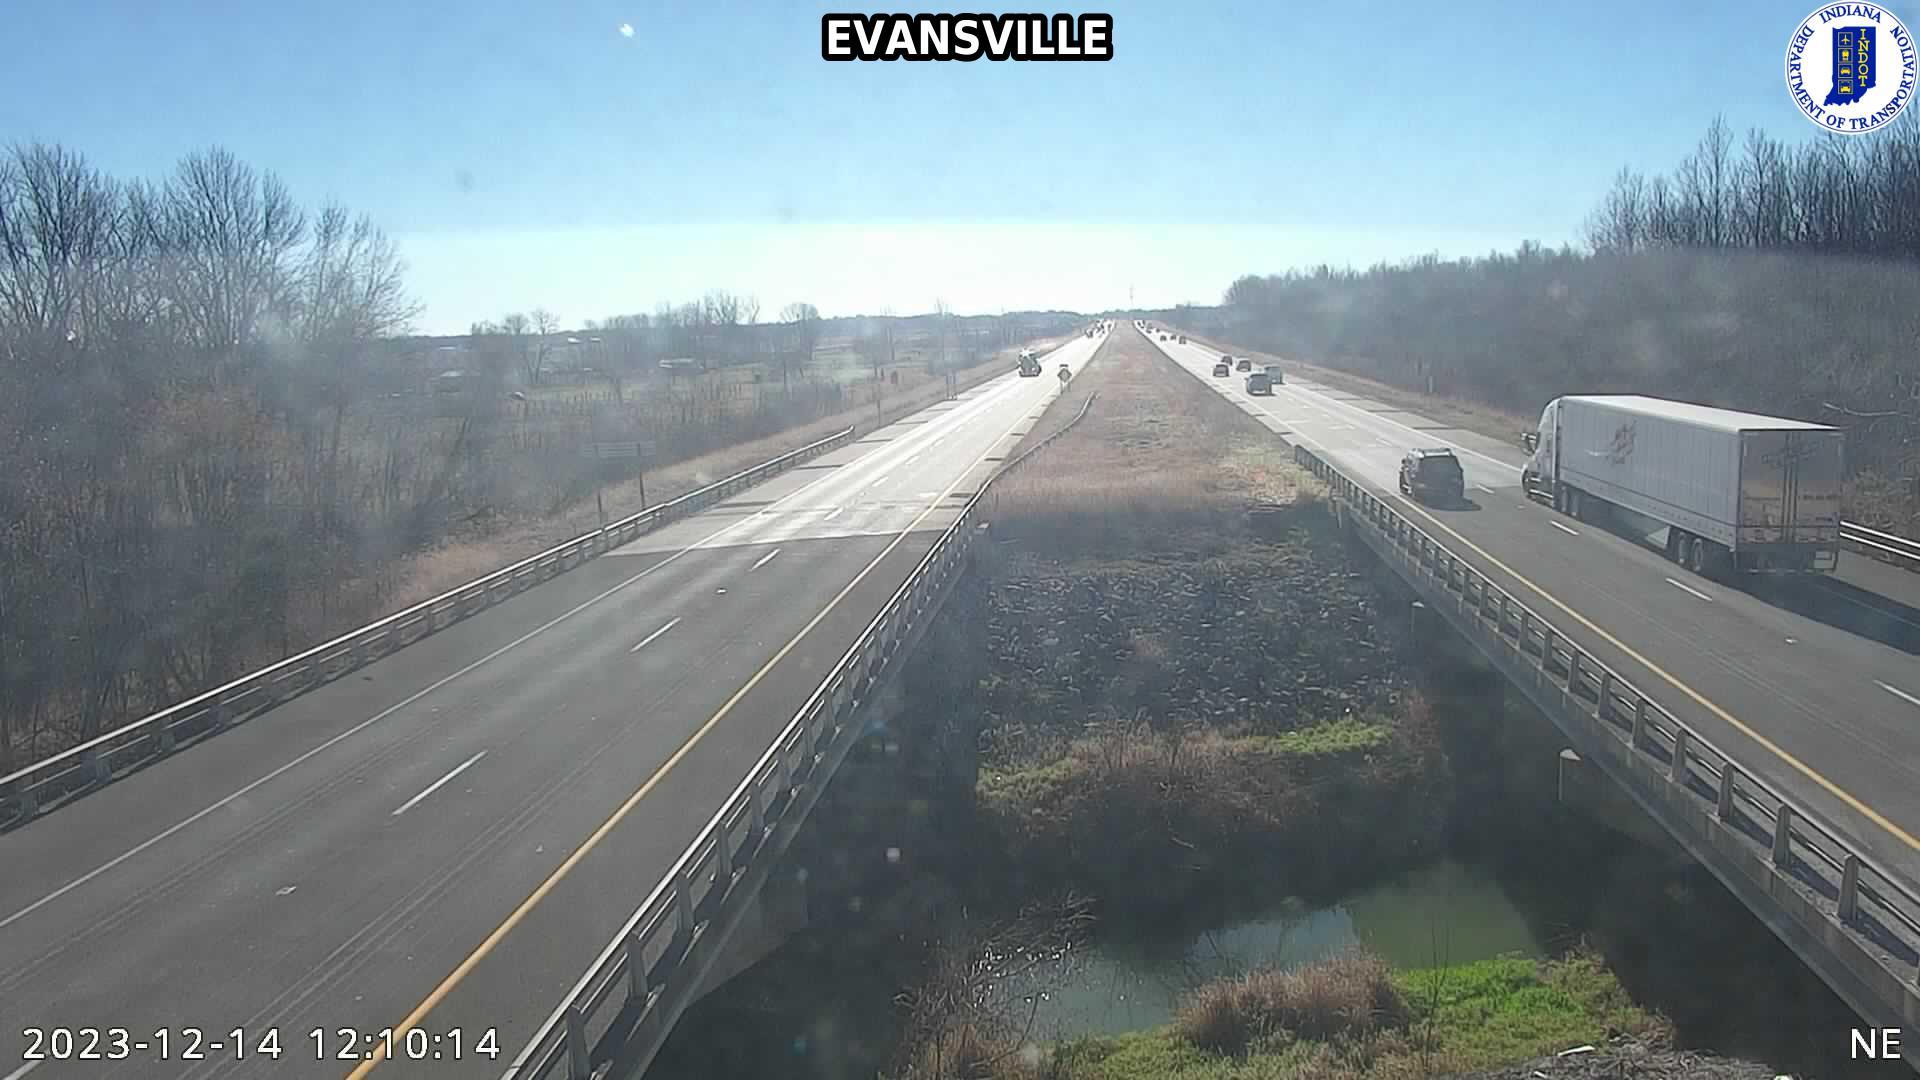 Saint John: I-69: EVANSVILLE Traffic Camera